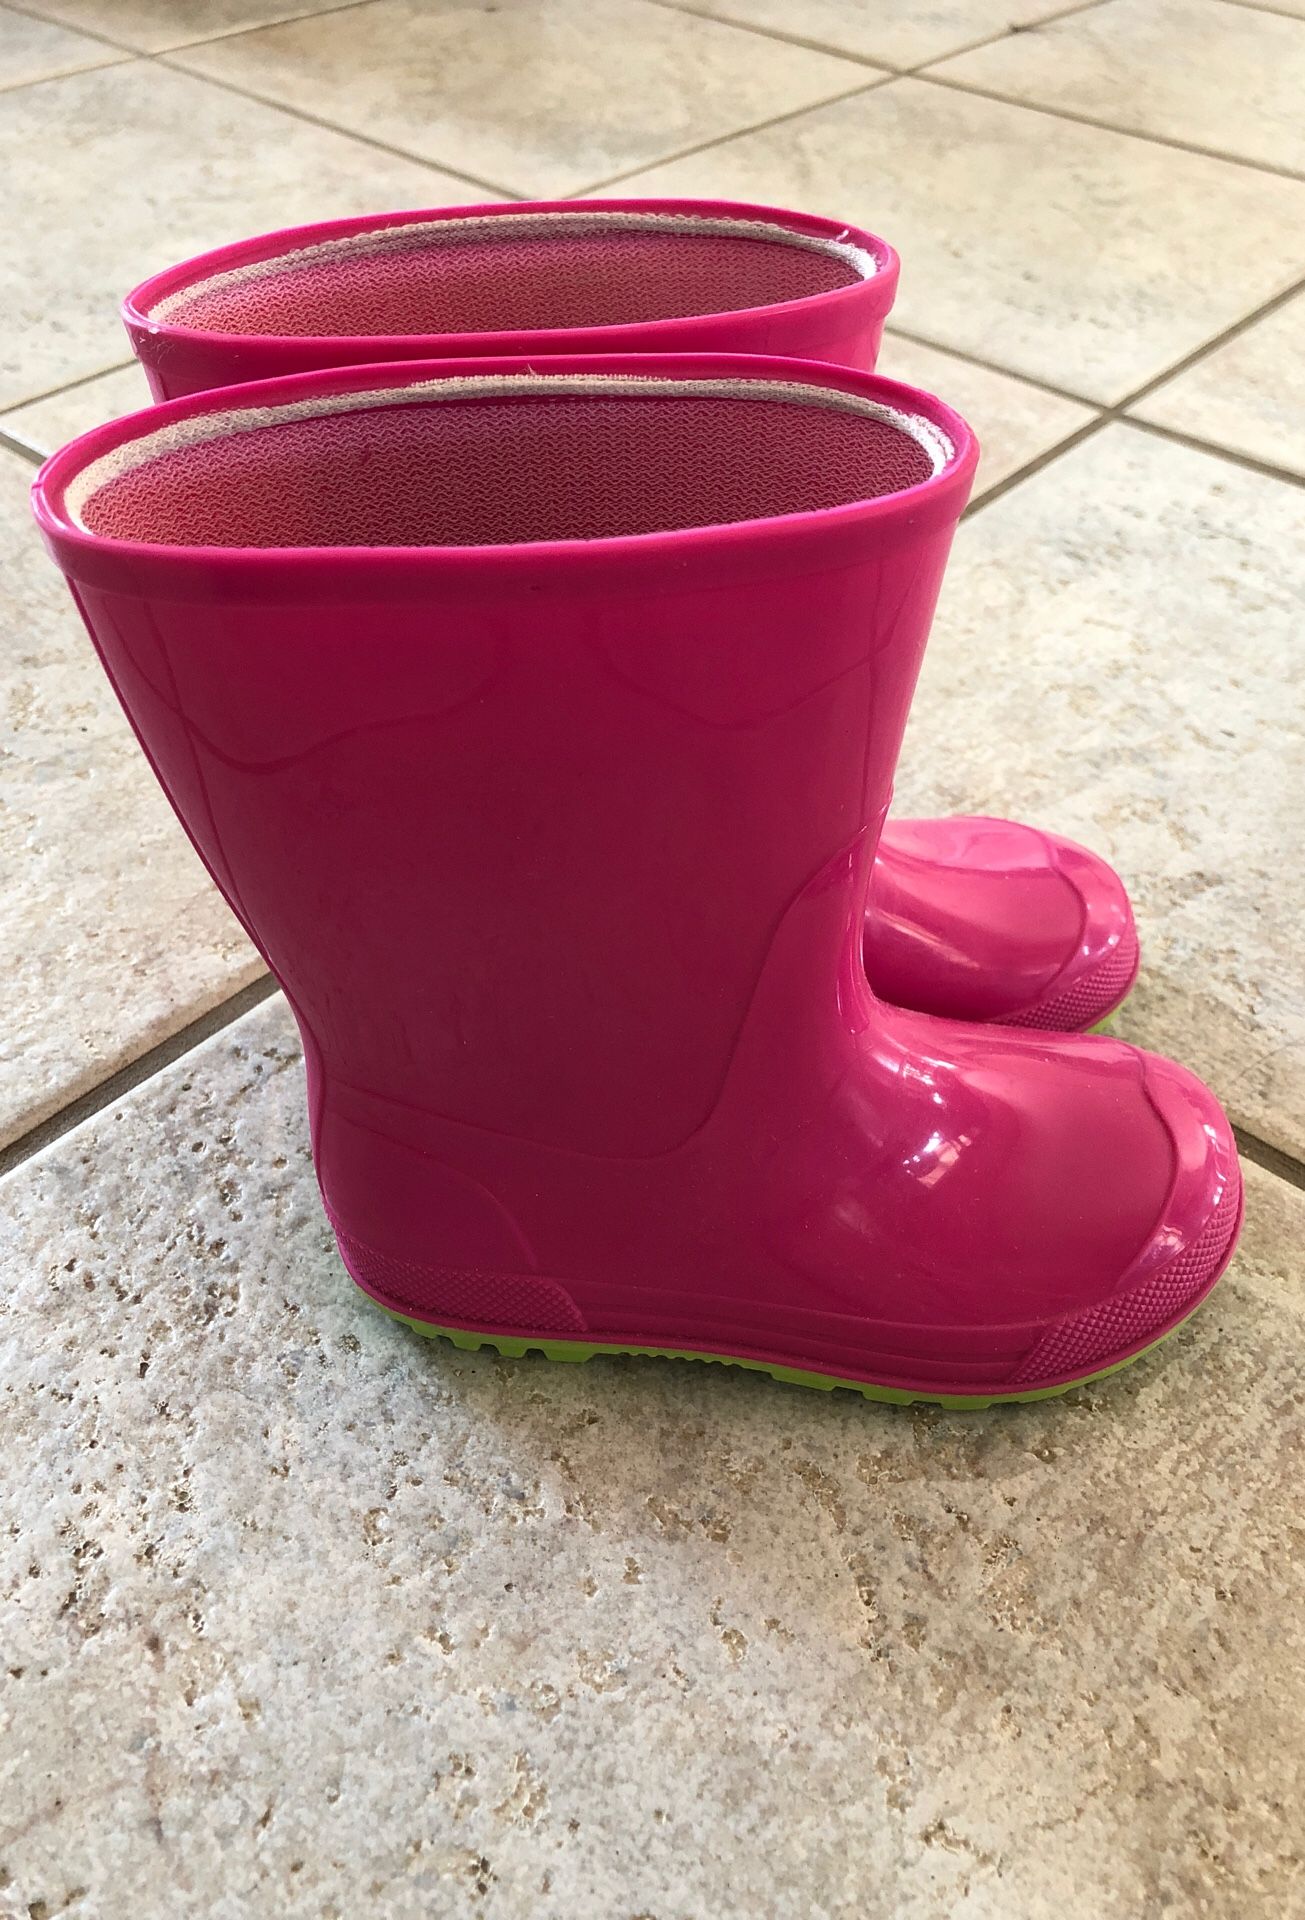 $7 Wonder Nation Toddler Girls’ Rain Boots Size 9-10 ☔️